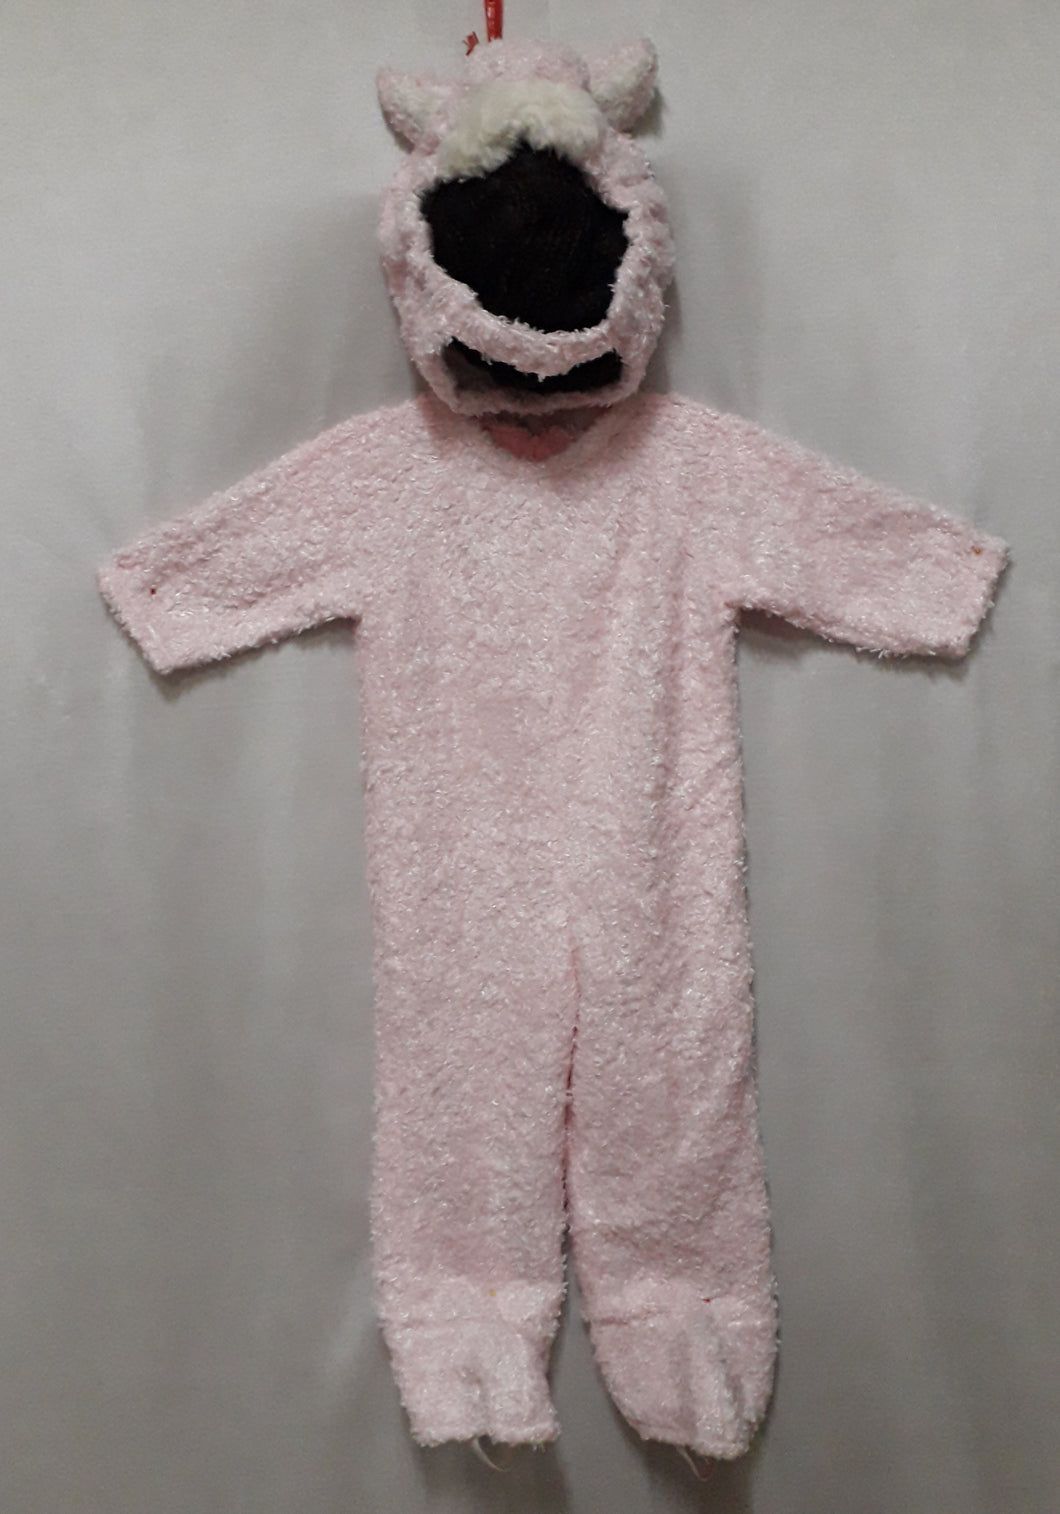 Sheep Costume for Kids, 1yo - 2yo